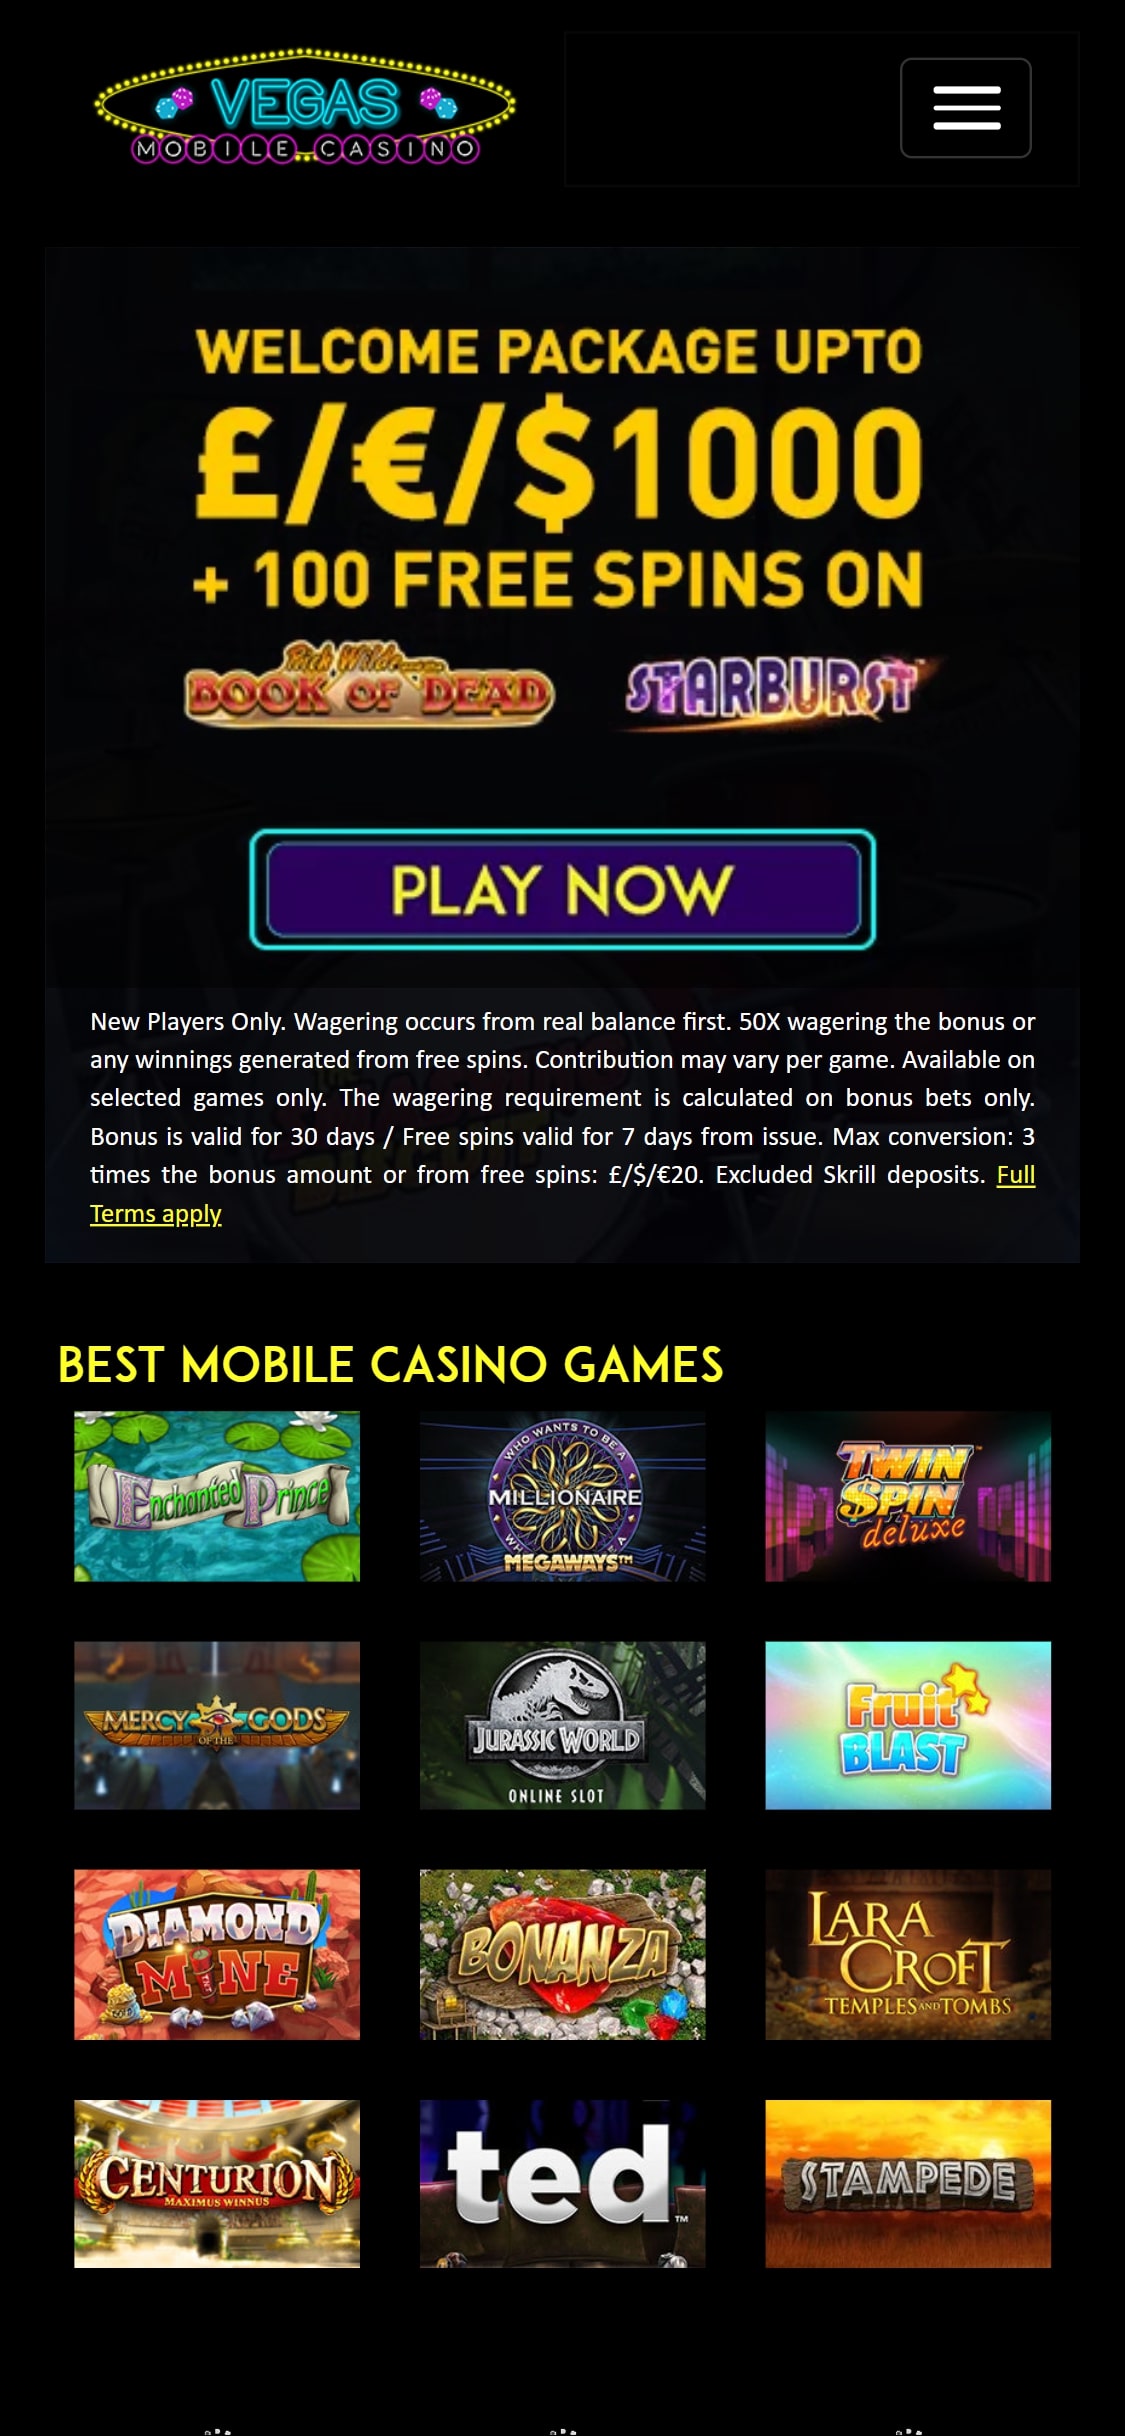 Vegas Mobile Casino Mobile Review